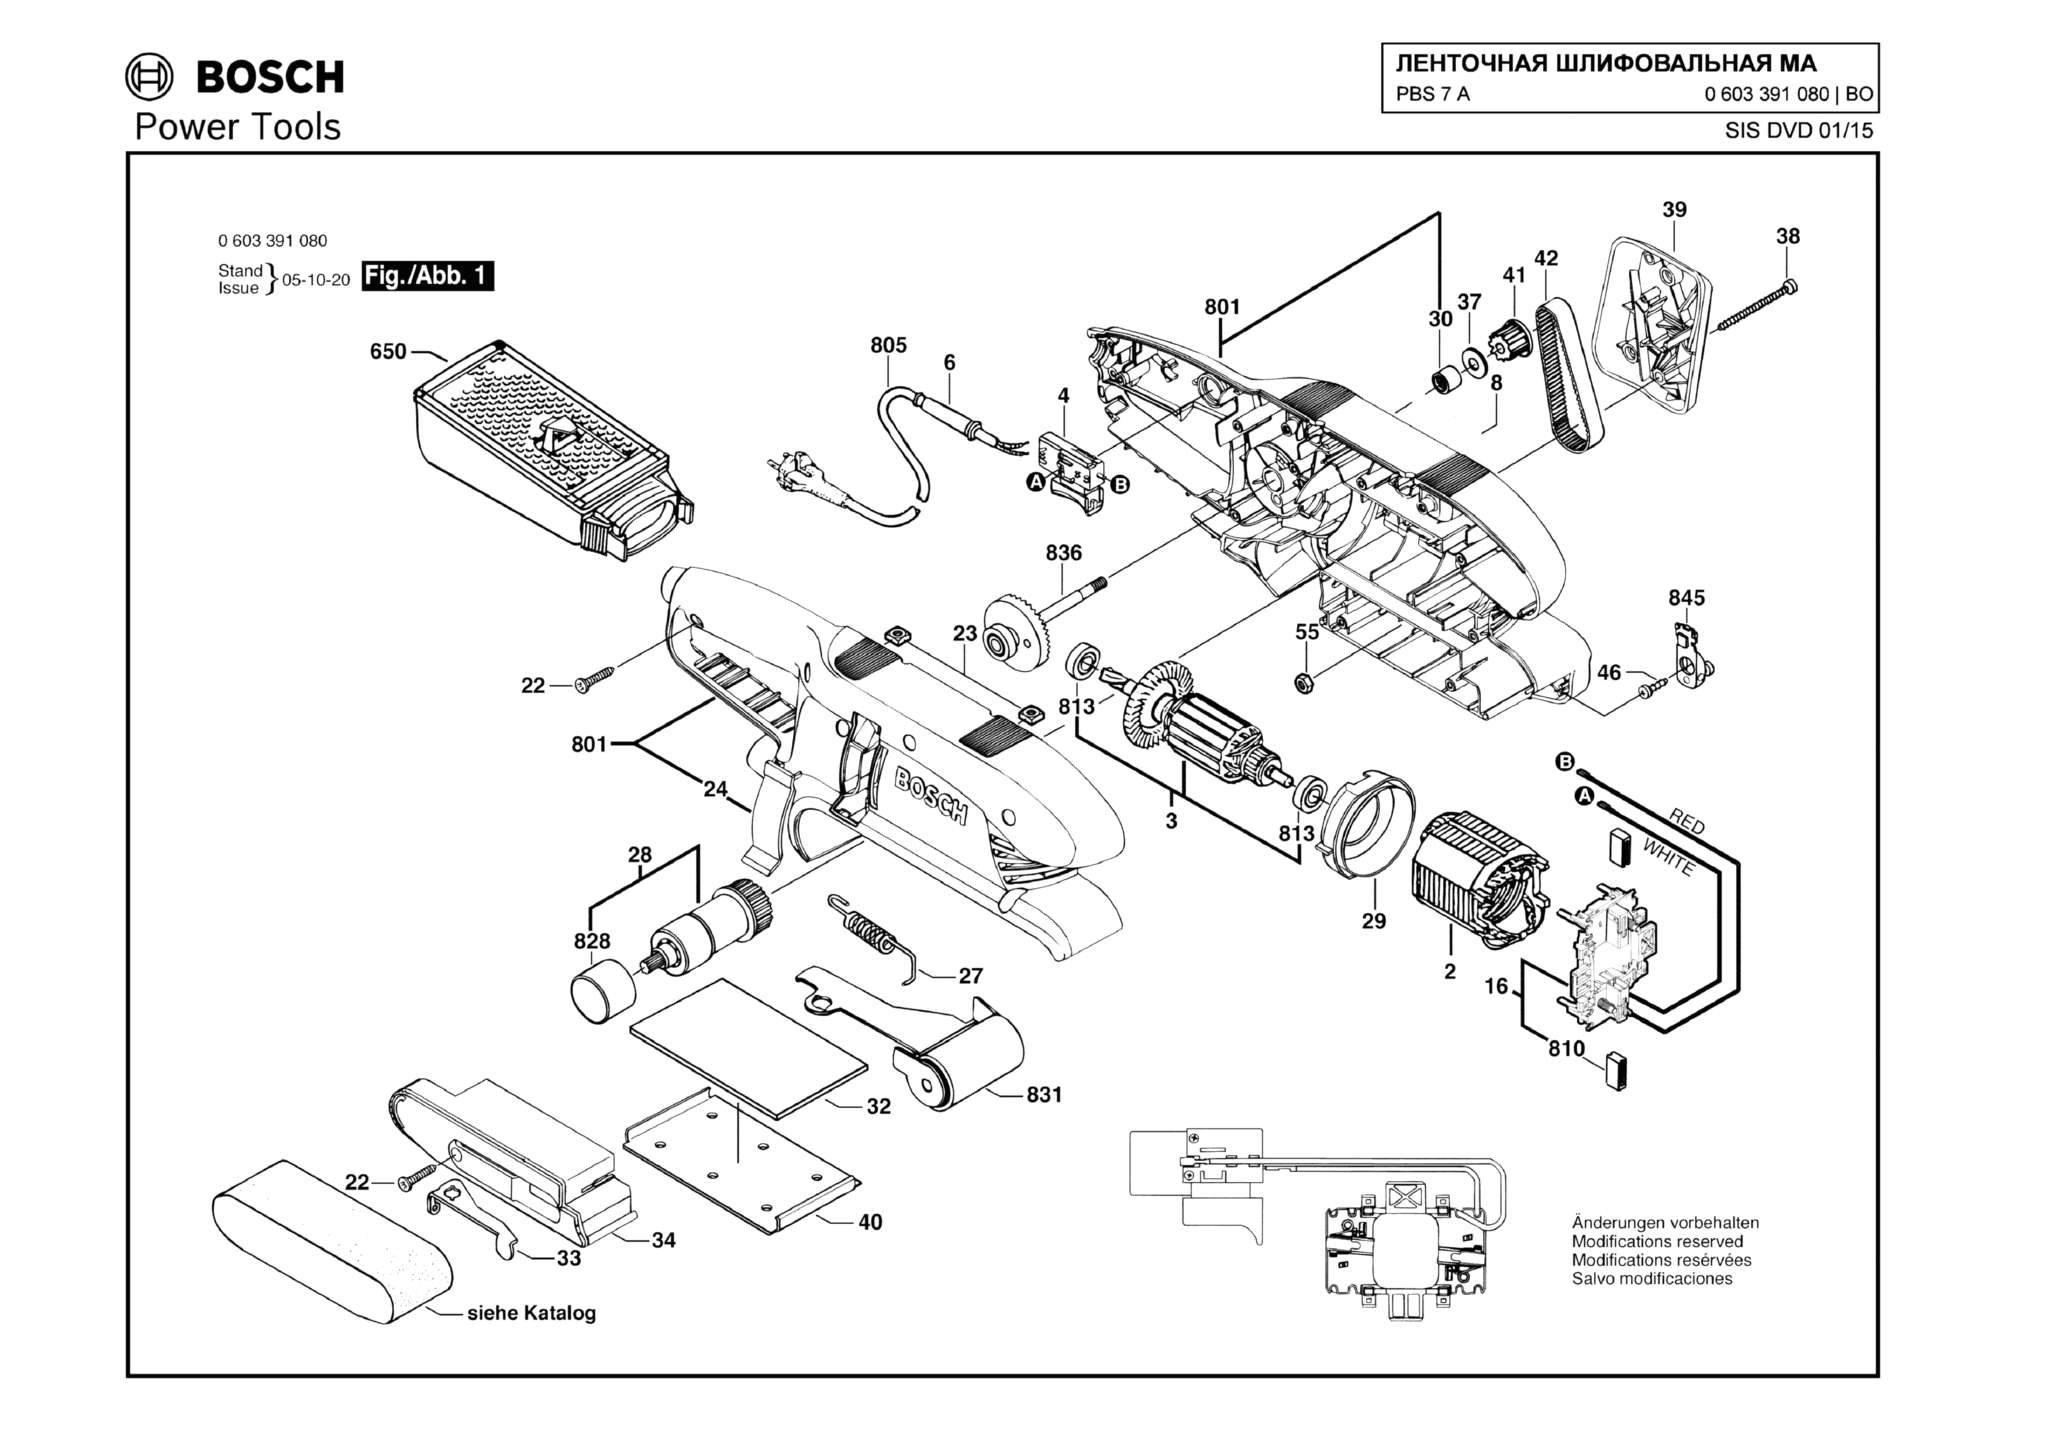 Запчасти, схема и деталировка Bosch PBS 7 A (ТИП 0603391080)